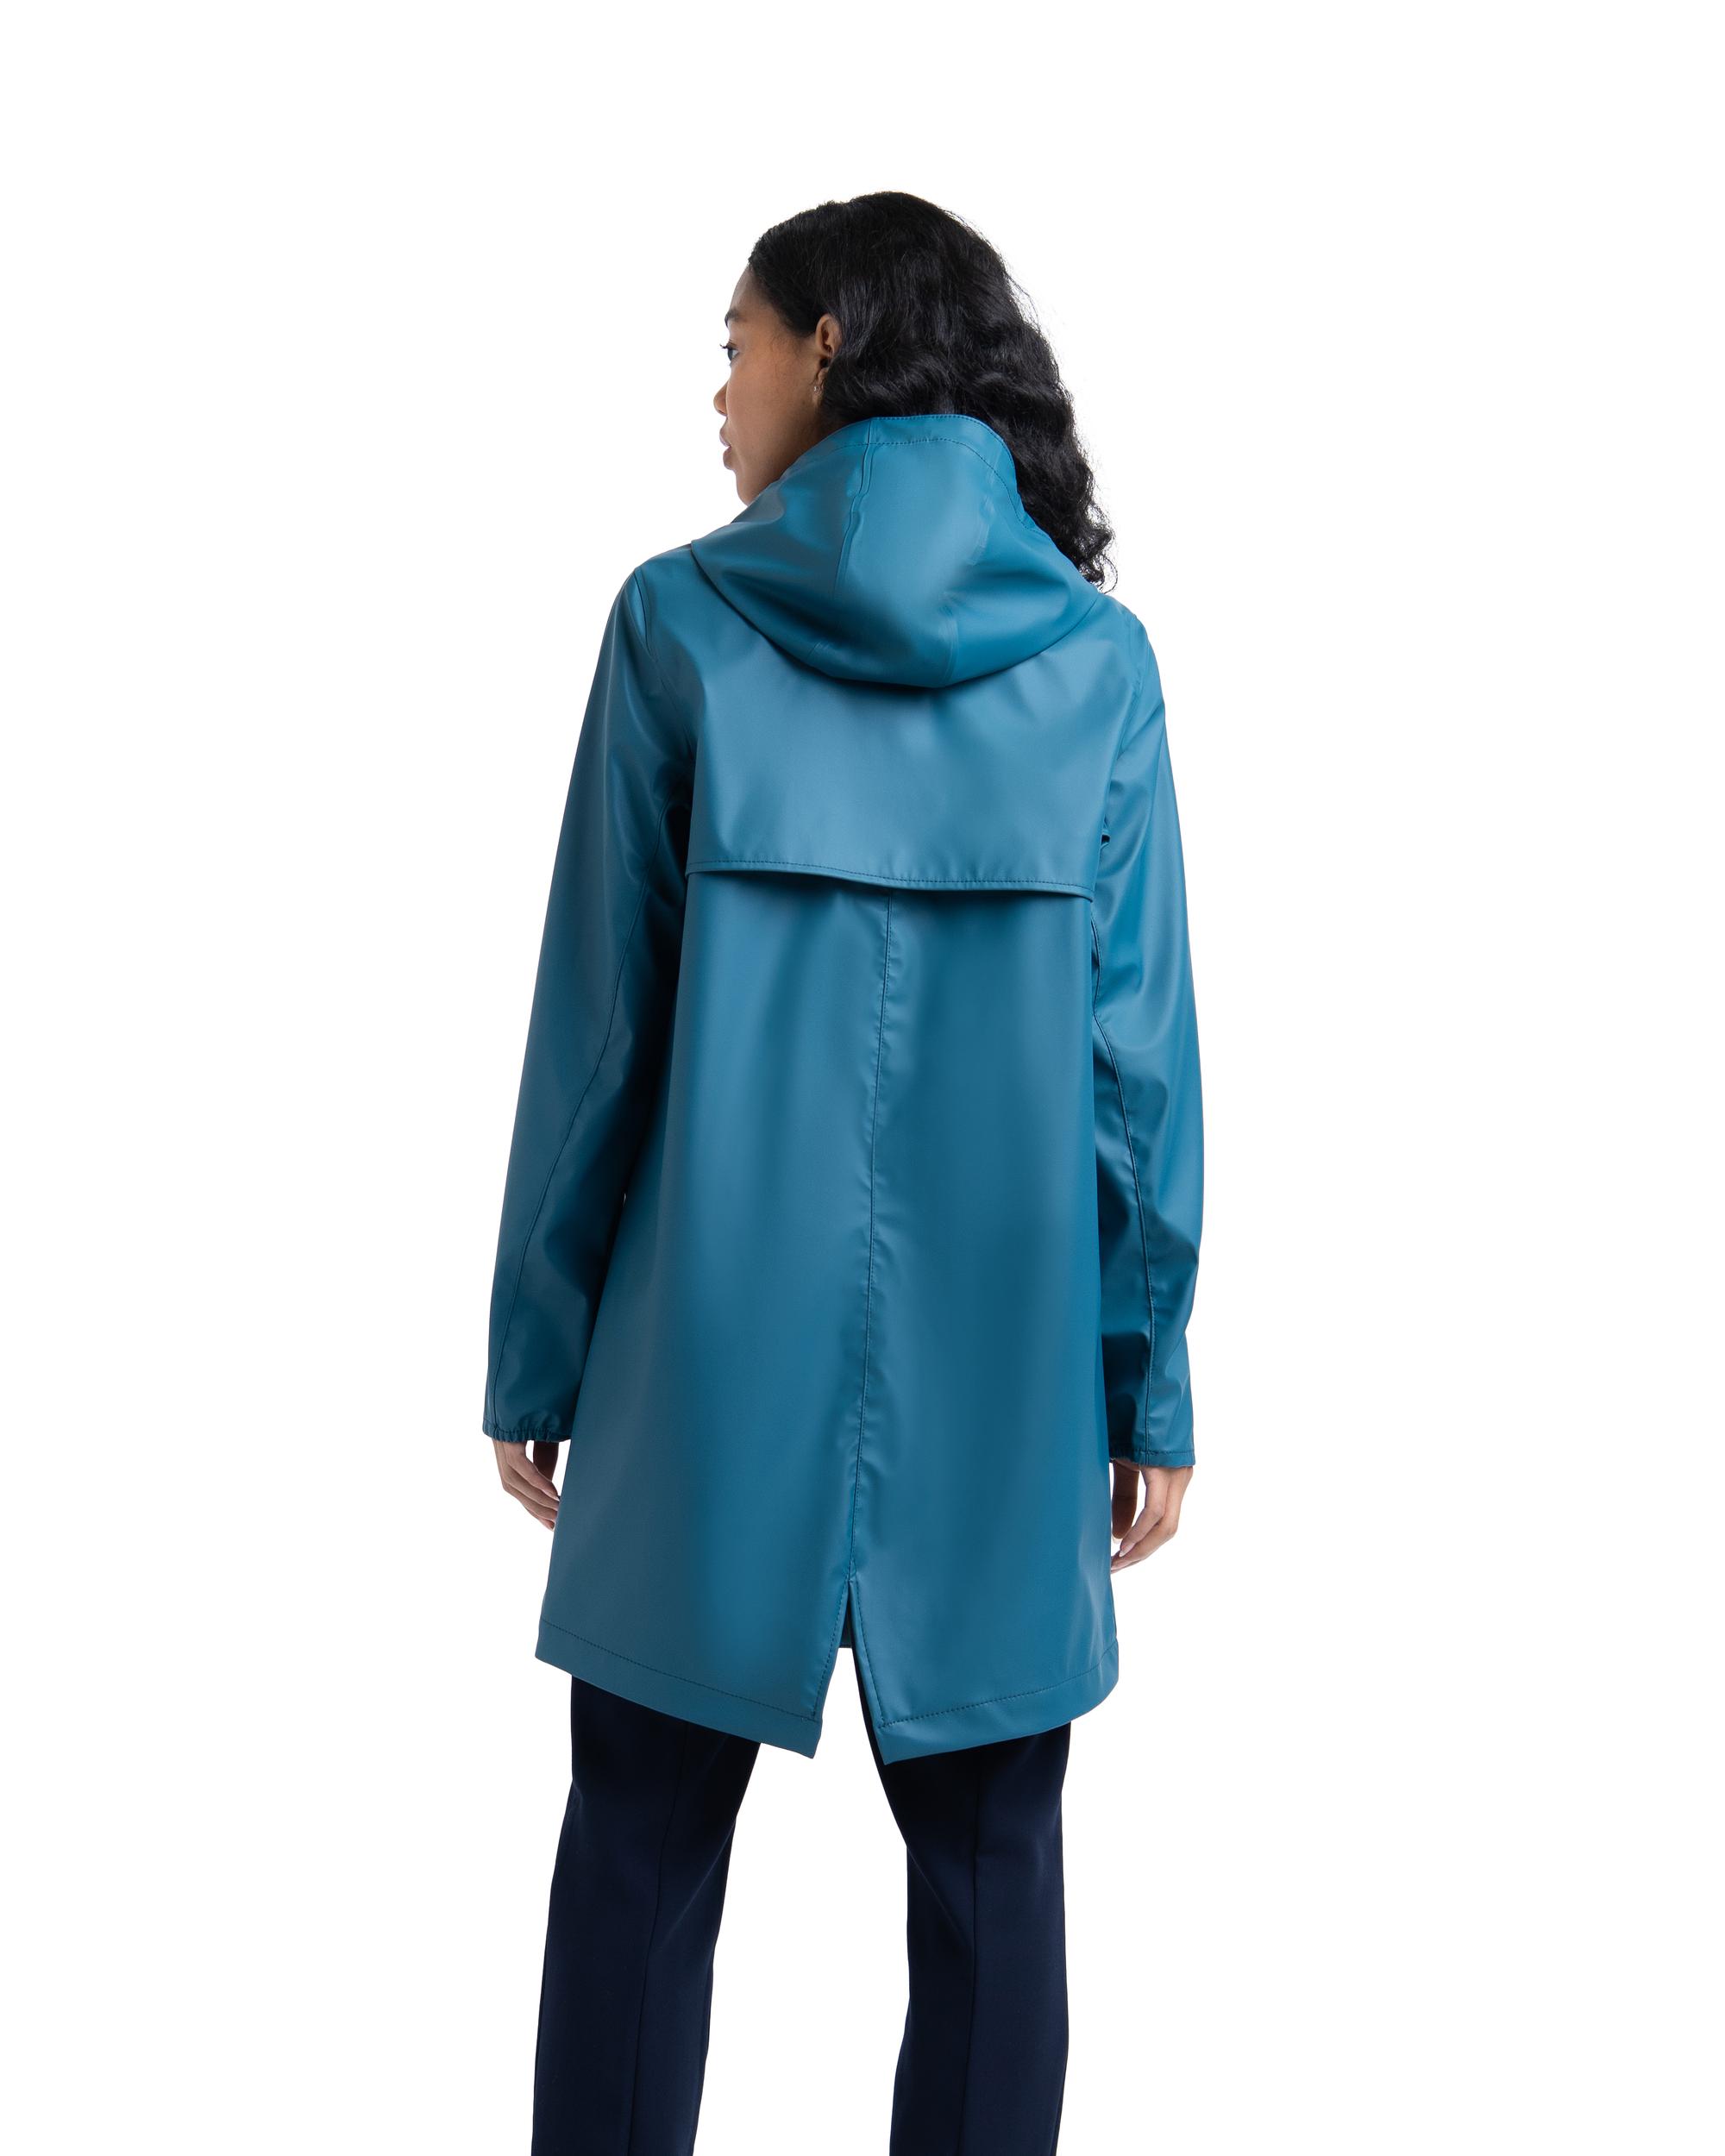 New Ladies Camouflage Fishtail Parka Mac Jacket Showerproof Hooded Raincoat 8-24 